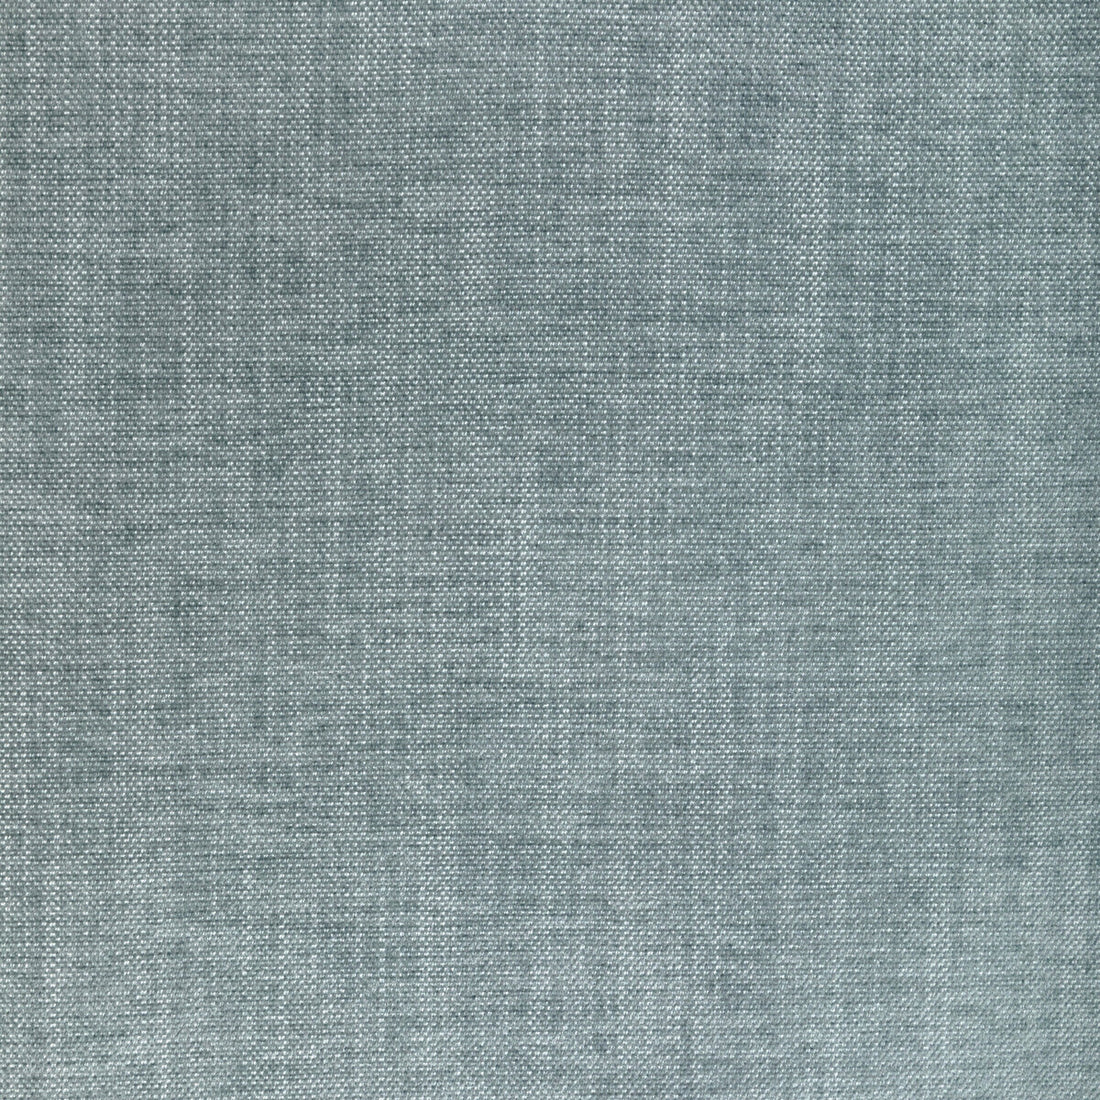 Kravet Smart fabric in 36650-15 color - pattern 36650.15.0 - by Kravet Smart in the Performance Kravetarmor collection